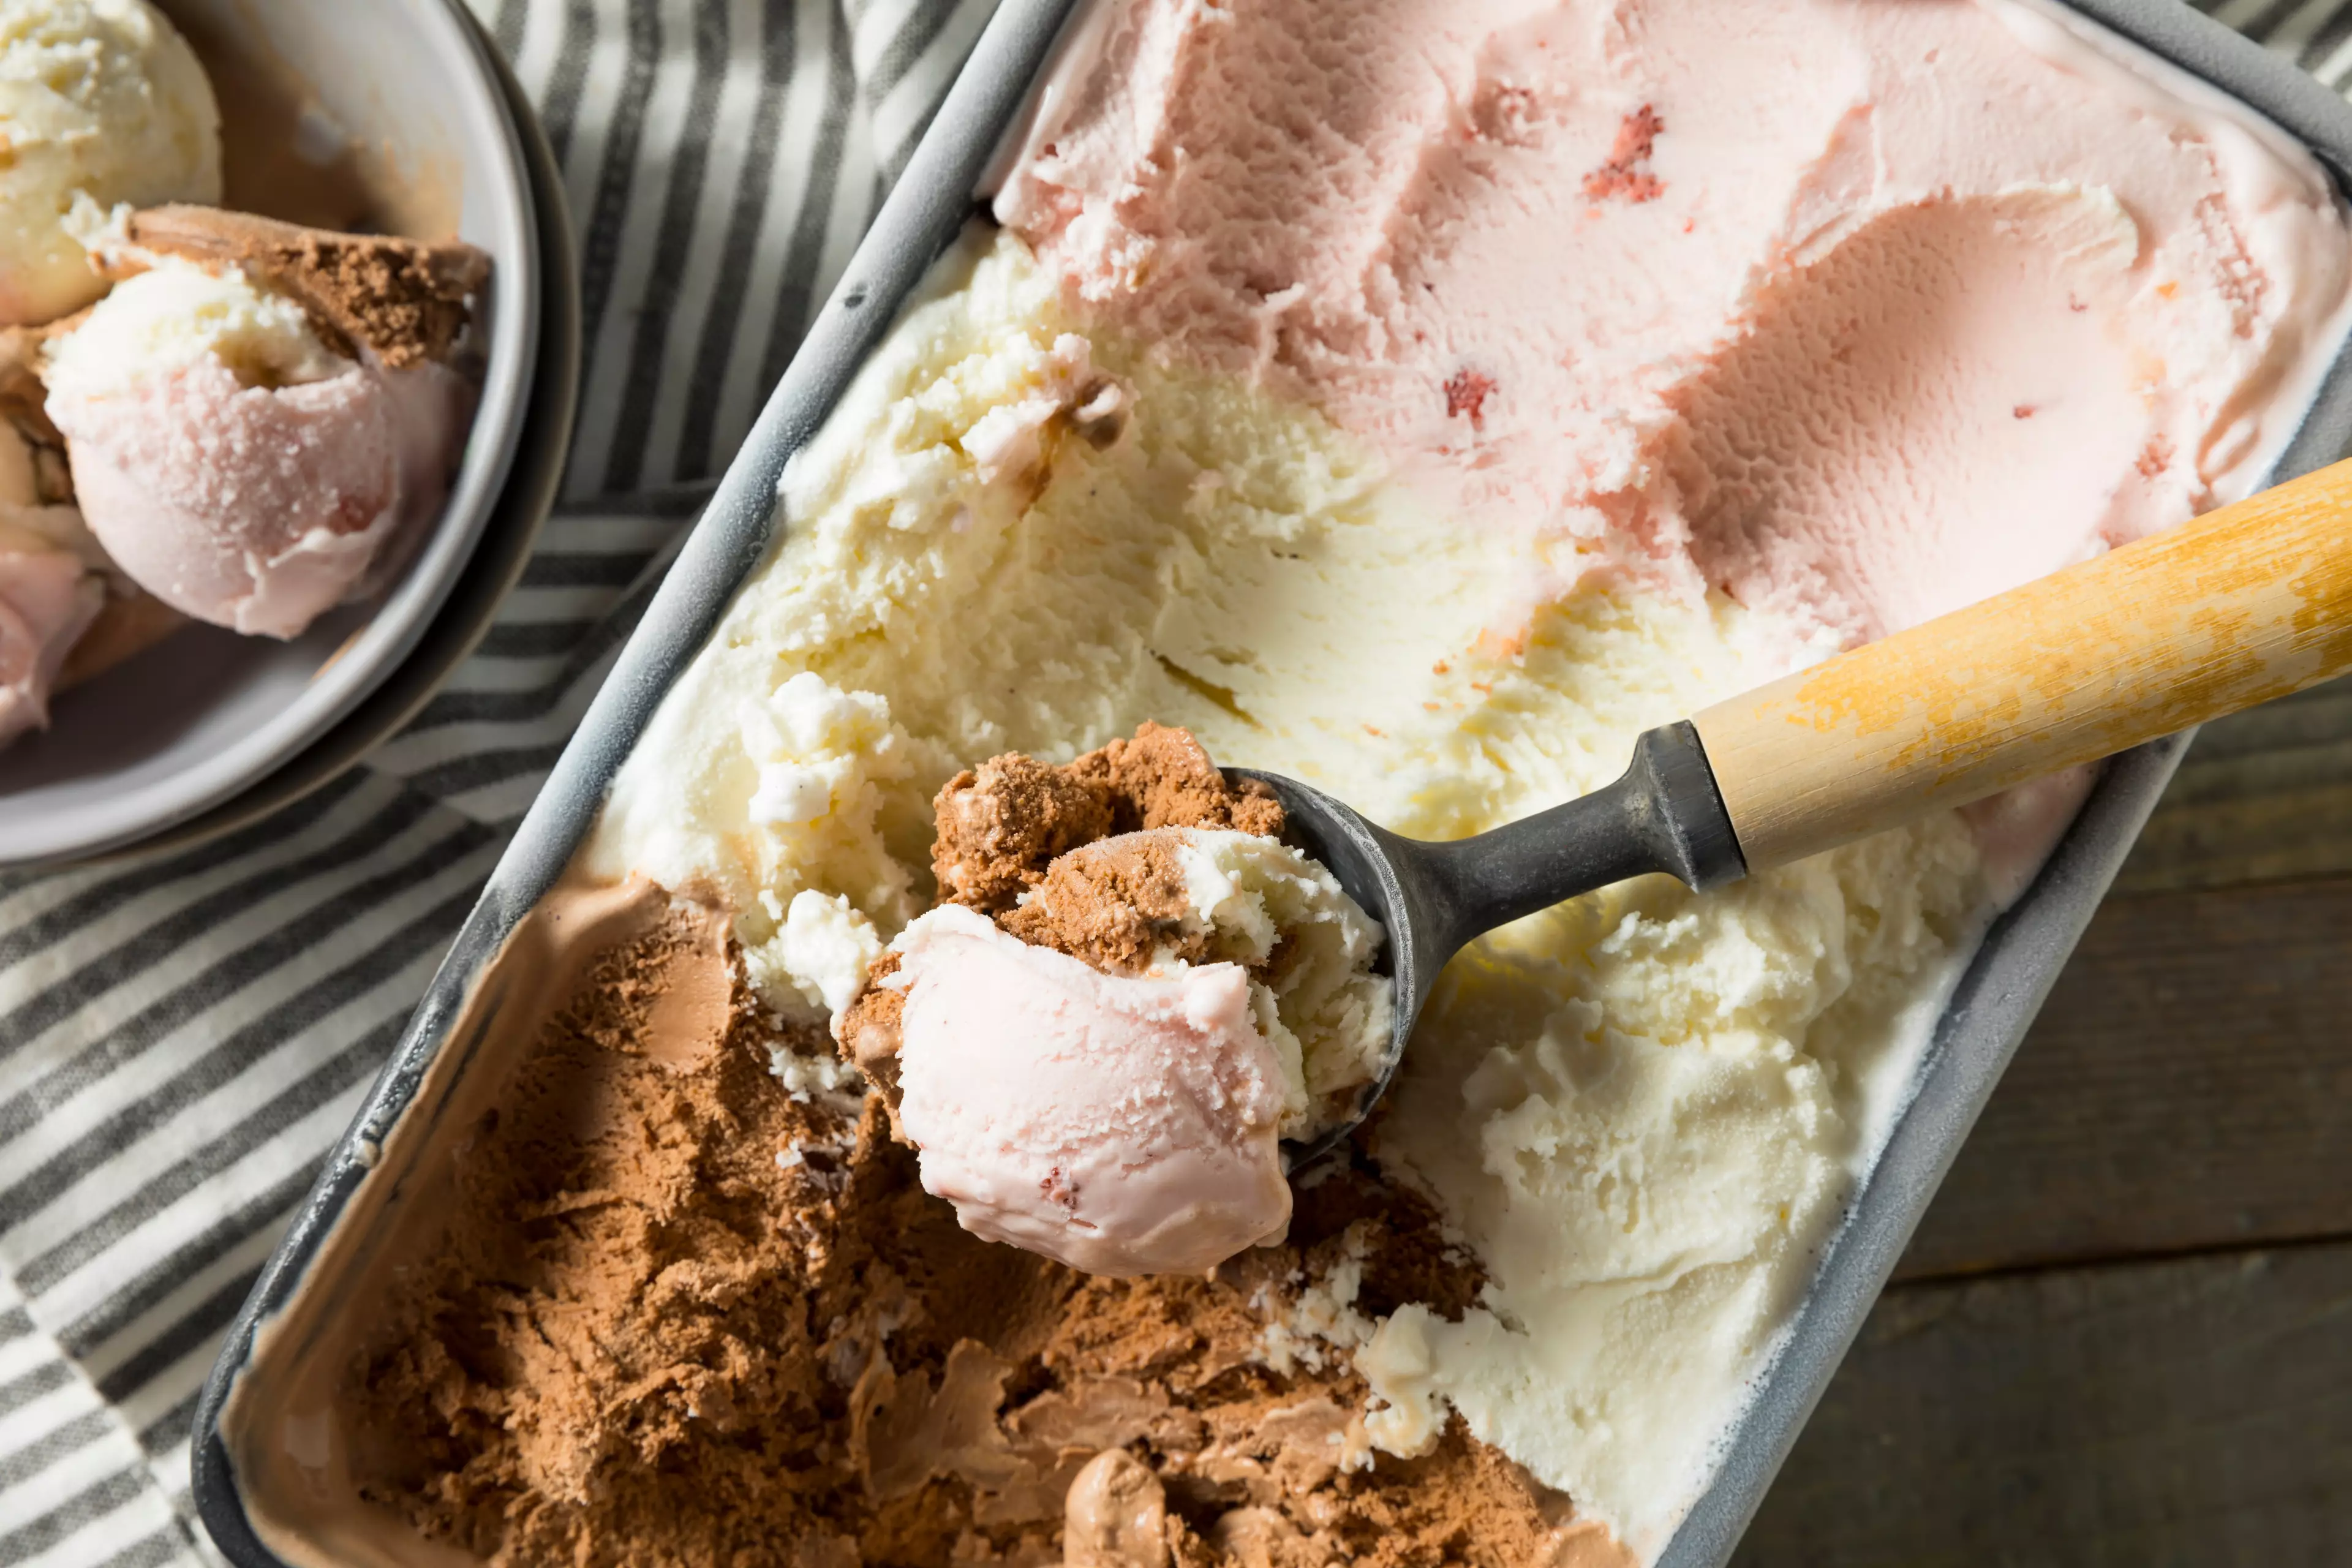 Chocolate, vanilla and strawberry make up the iconic Neapolitan ice cream trio (